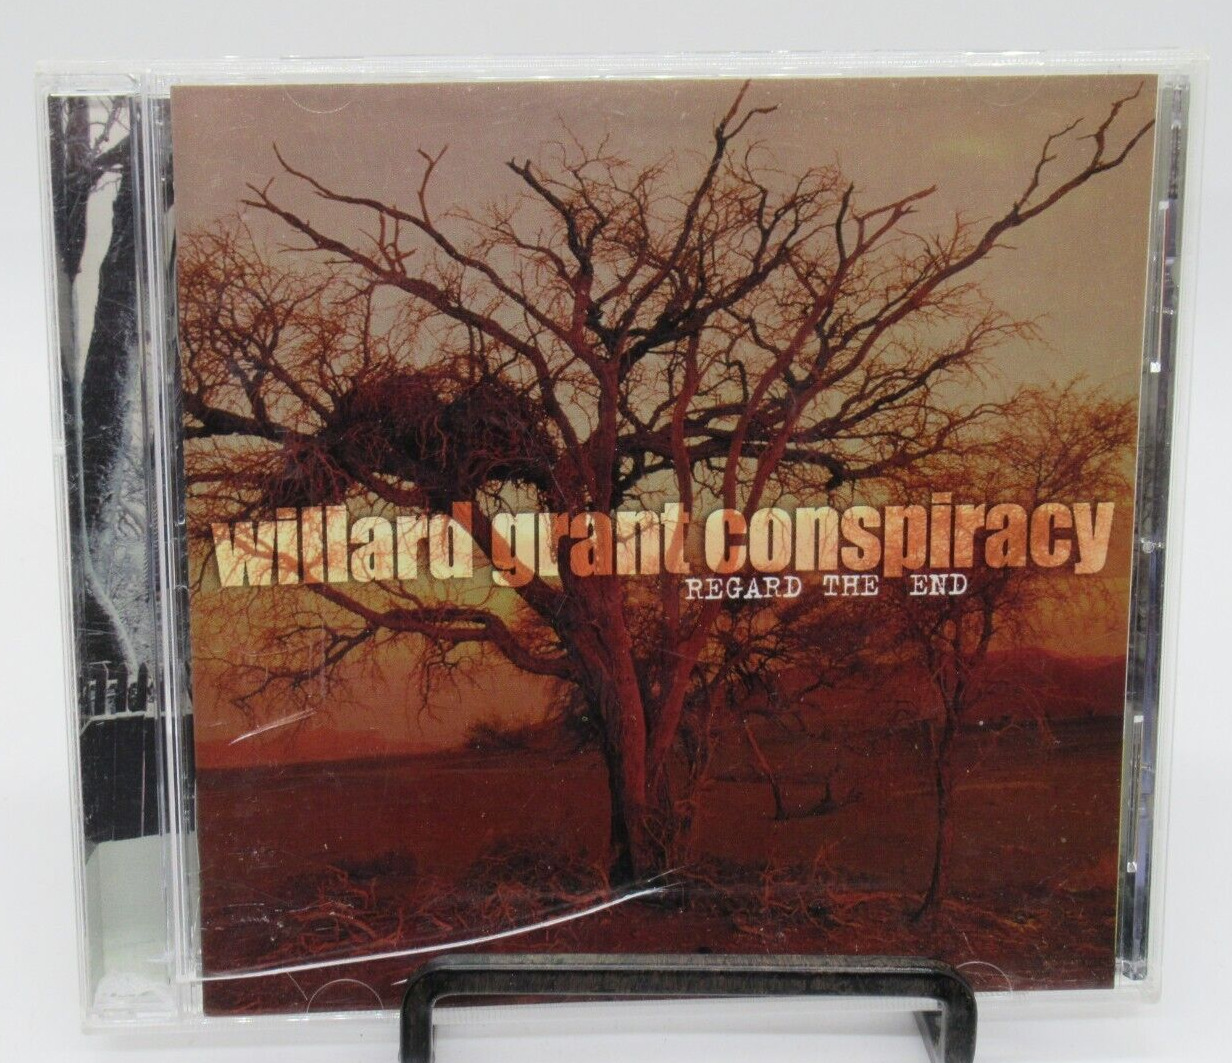 WILLARD GRANT CONSPIRACY: REGARD THE END MUSIC CD, 11 TRACKS, KIMCHEE RECORDS